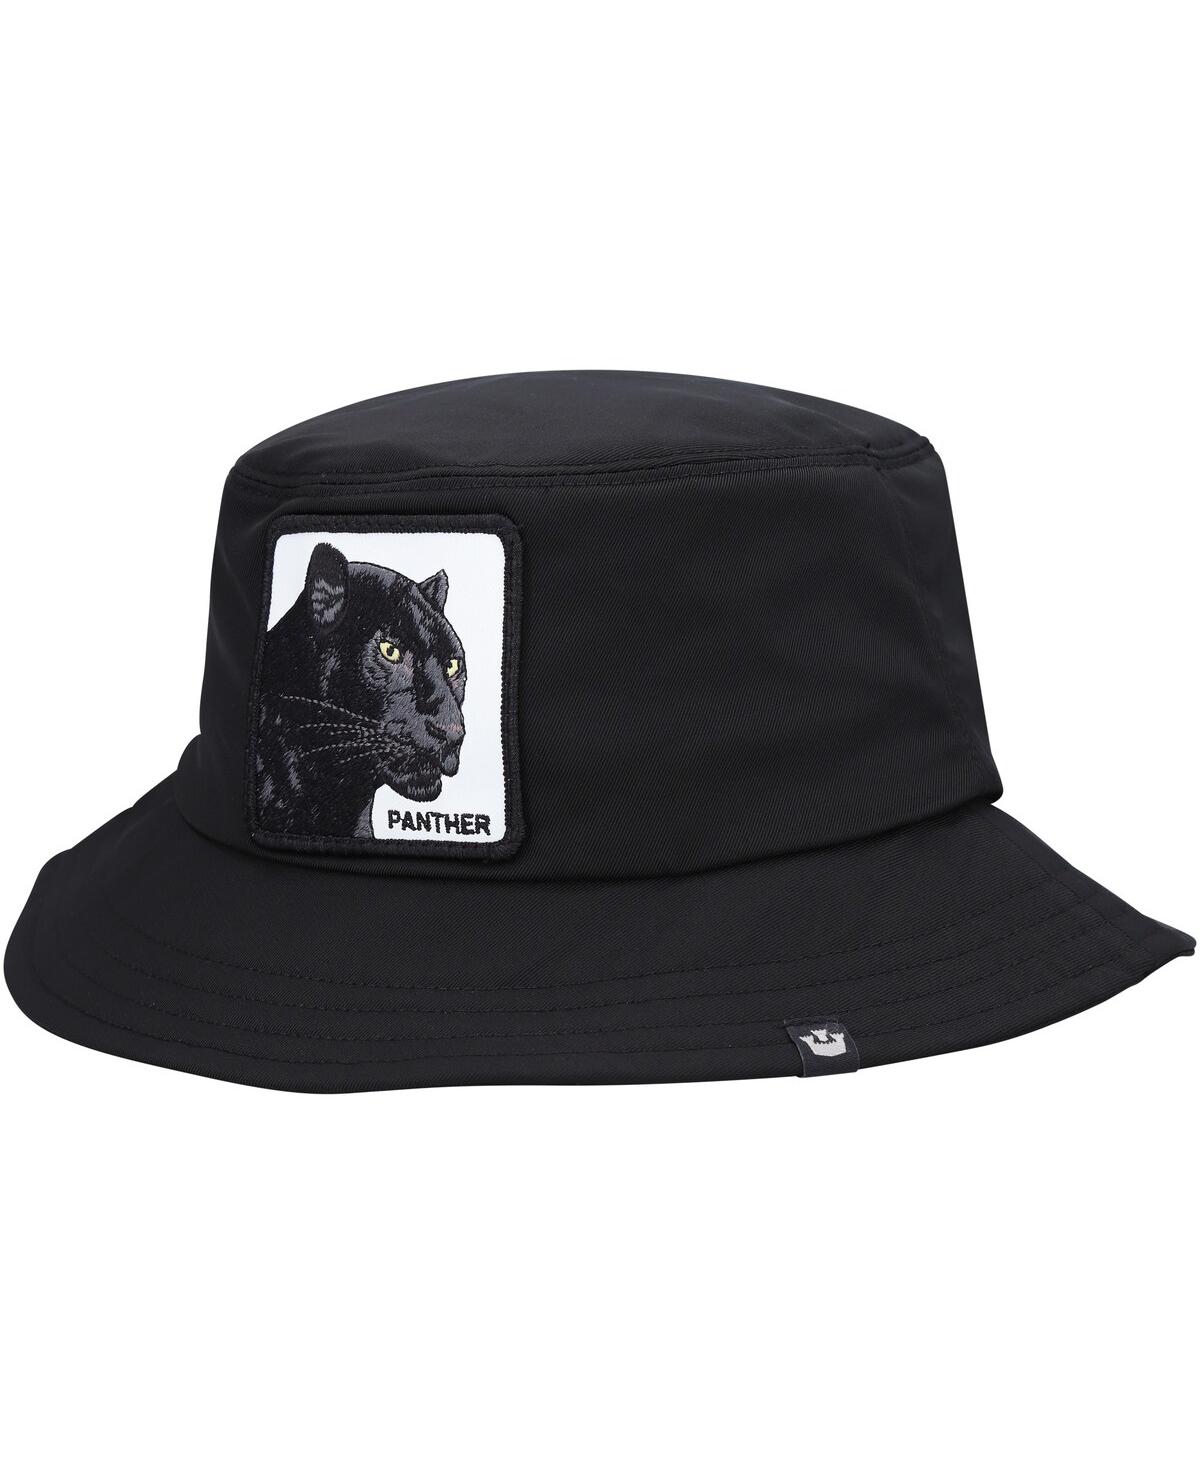 Goorin Bros Men's . Black Panther Bucket Hat